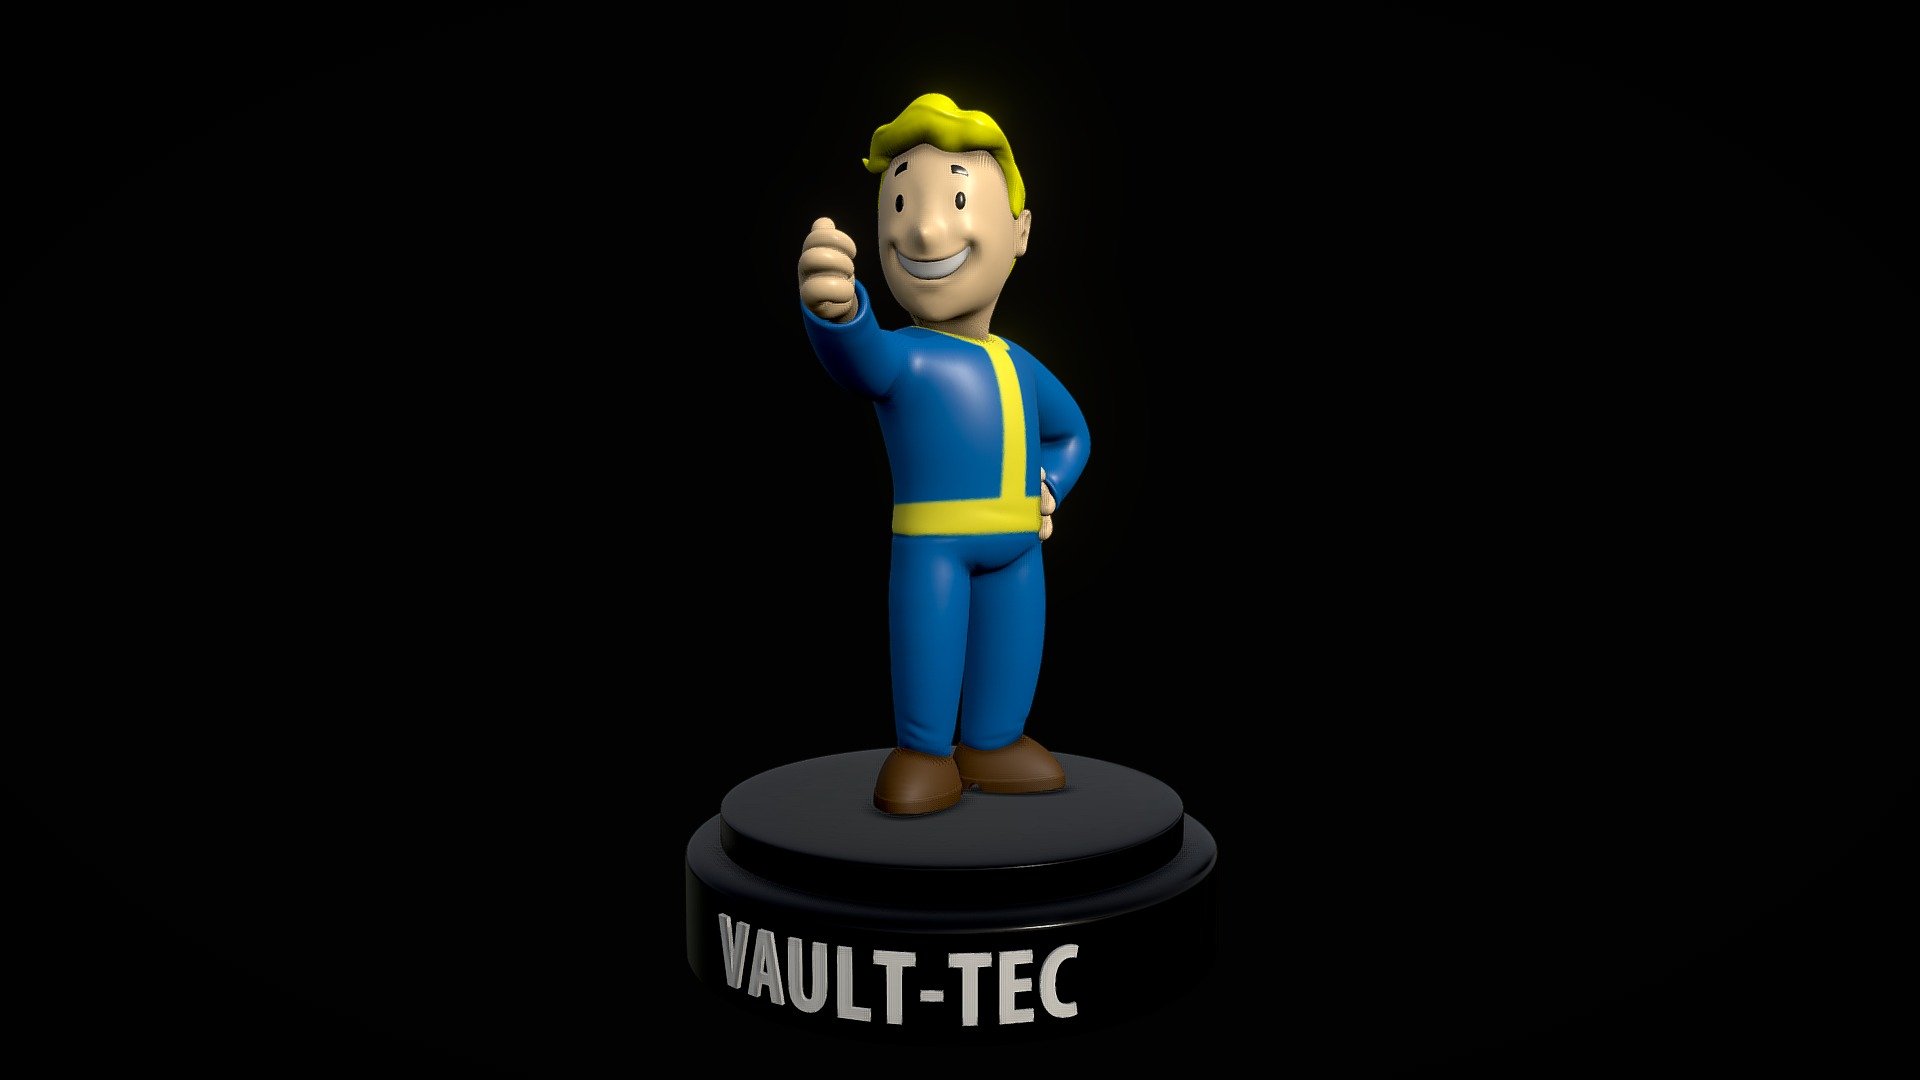 3d model of vault boy from the fallout saga, one of my favourites videogame franchises, hope you like it - Vault boy - 3D model by Sebastian Valenzuela (@Svalenzuela28) 3d model